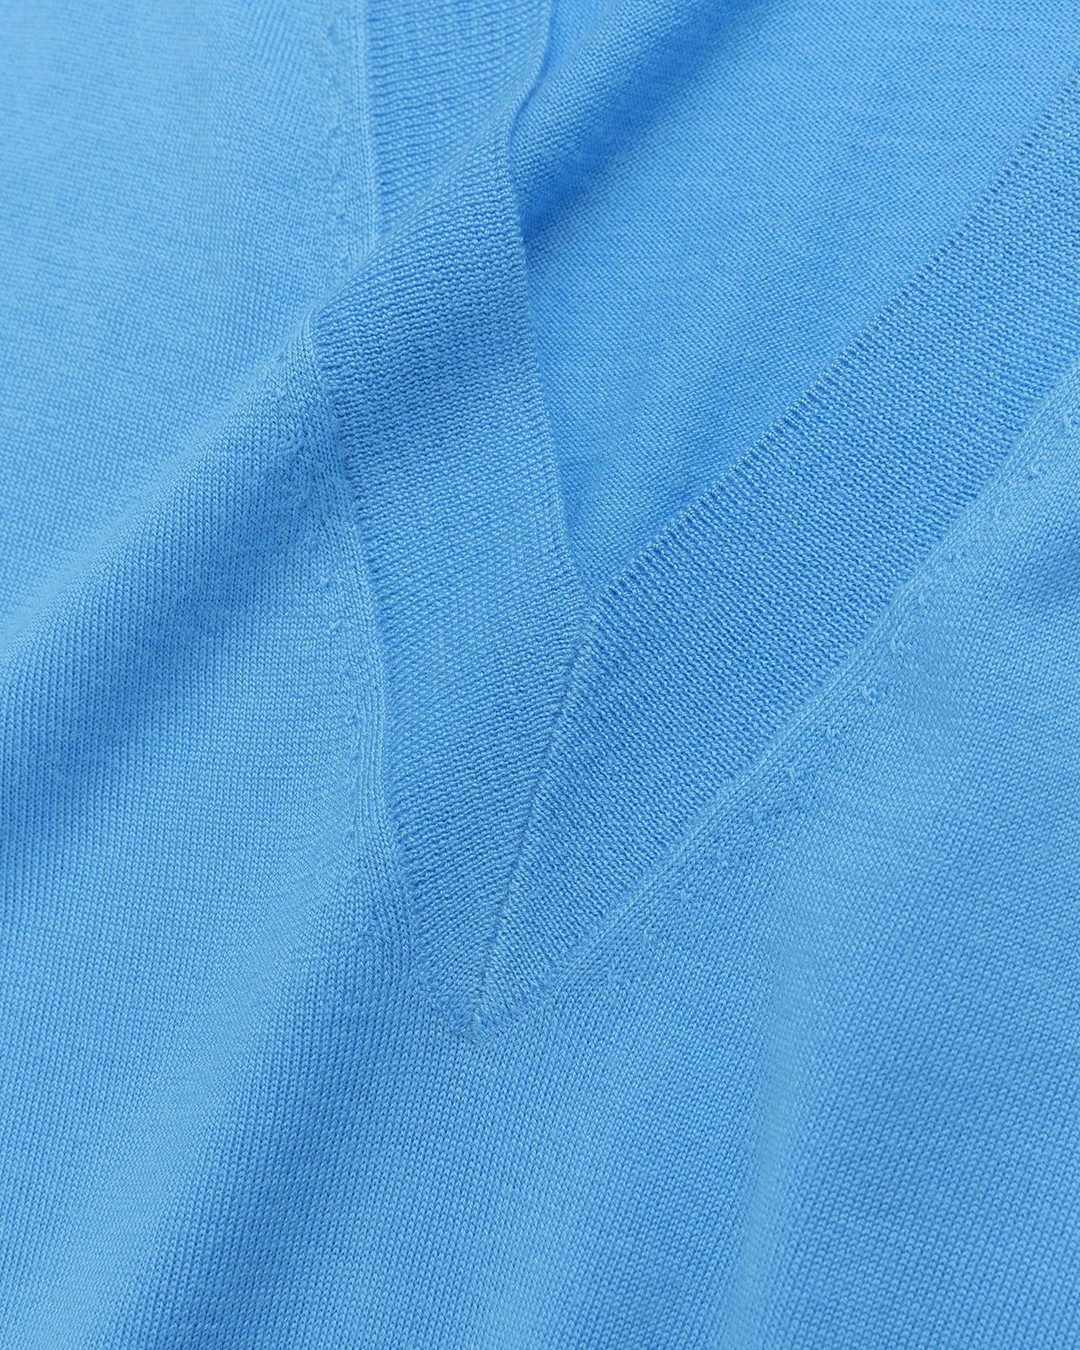 Dries van Noten – Merino Sleeveless Sweater Madonna - Knitwear - Blue - Image 4